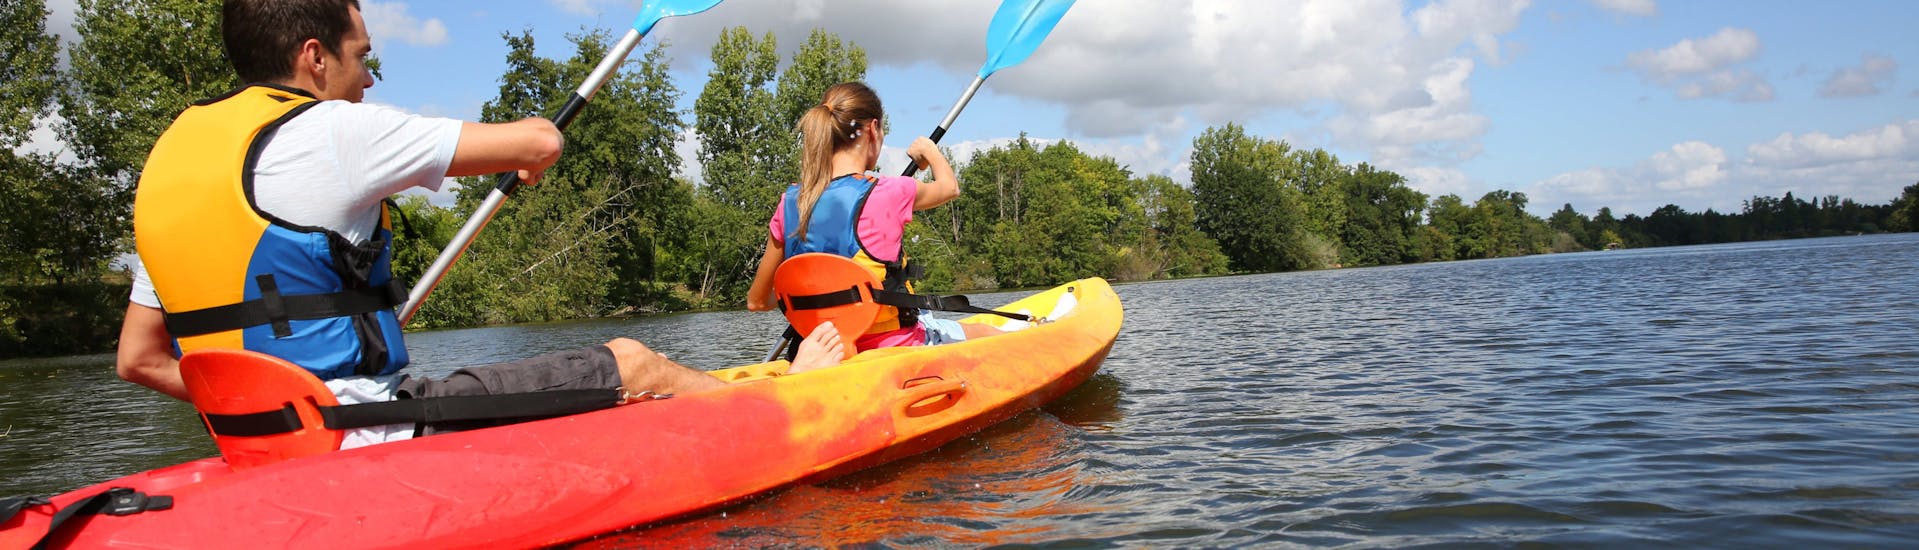 Sportliche Kayak & Kanu-Tour in Chalonnes-sur-Loire - Loire River.